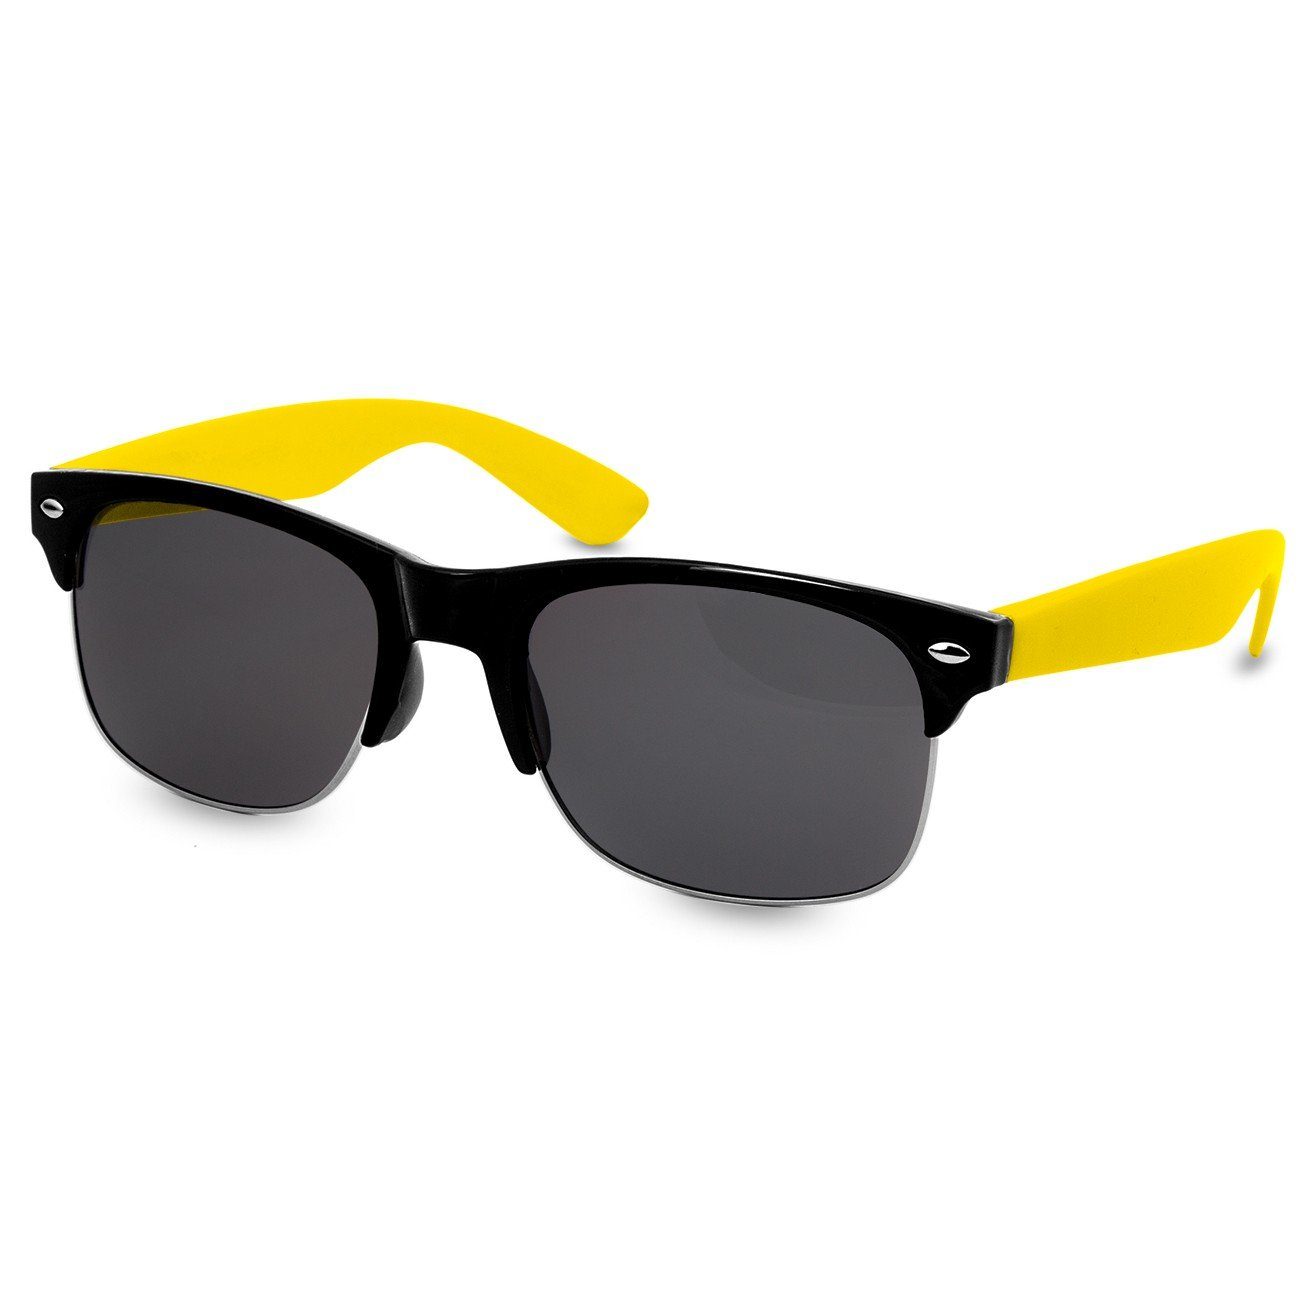 Caspar Sonnenbrille SG014 Unisex Retro Design Sonnenbrille